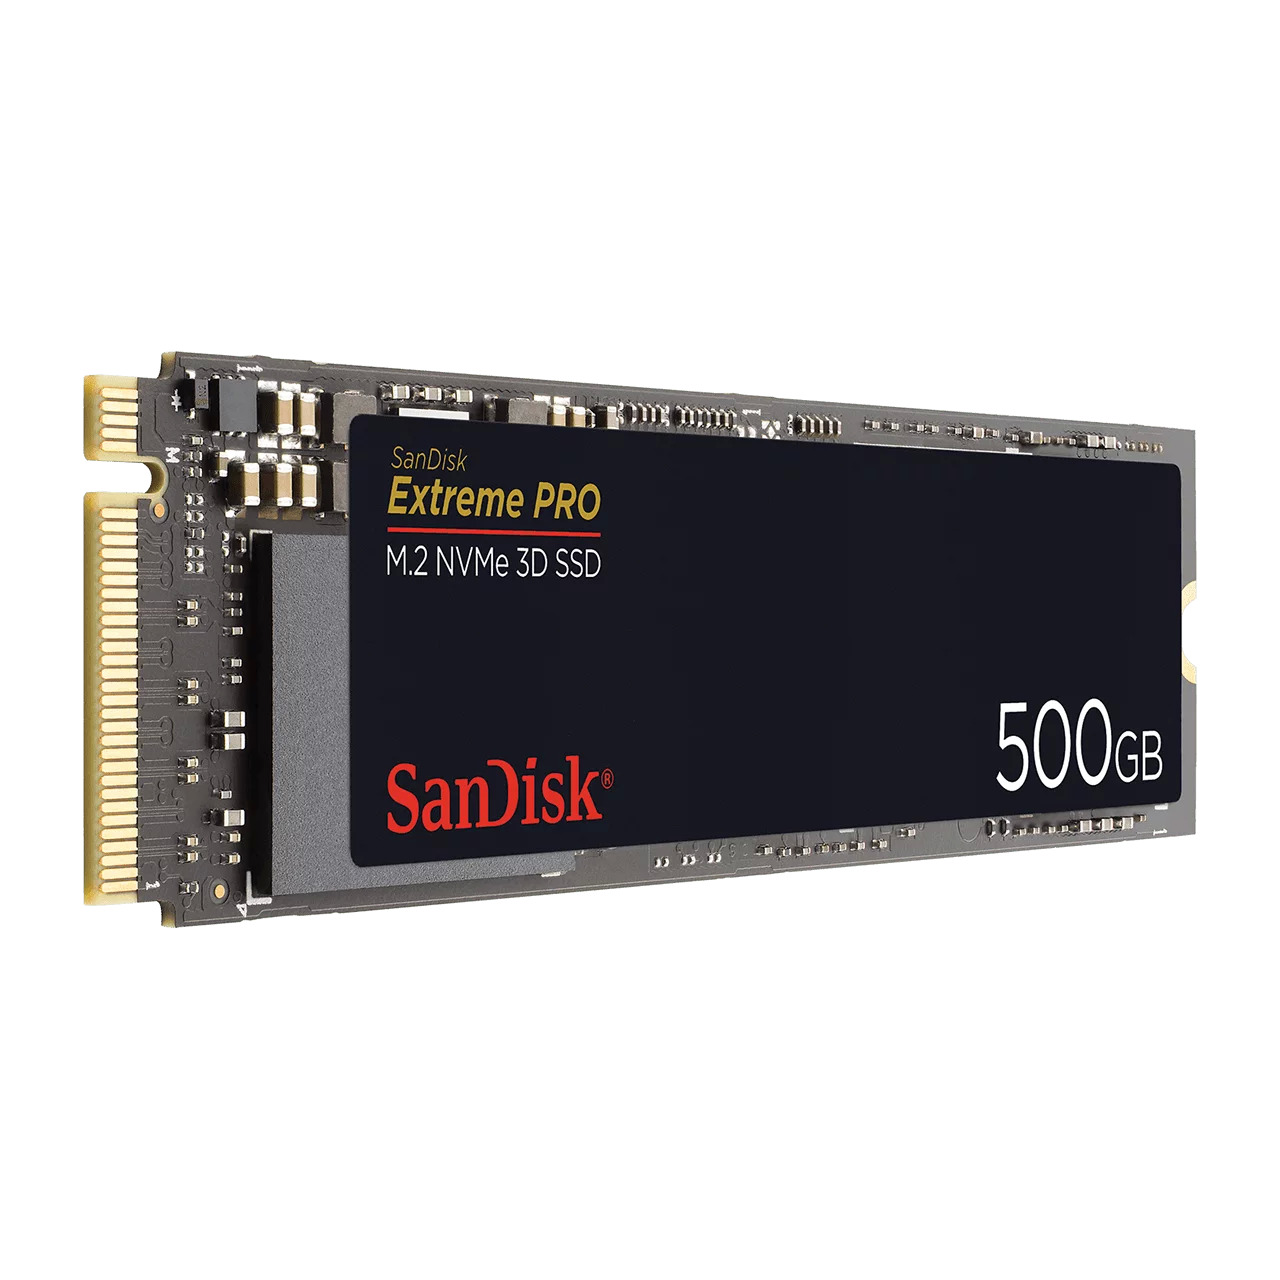 SanDisk 500GB Extreme PRO M.2 NVMe 3D SSD, Internal Solid State Drive - SDSSDXPM2-500G-G25 $27.99